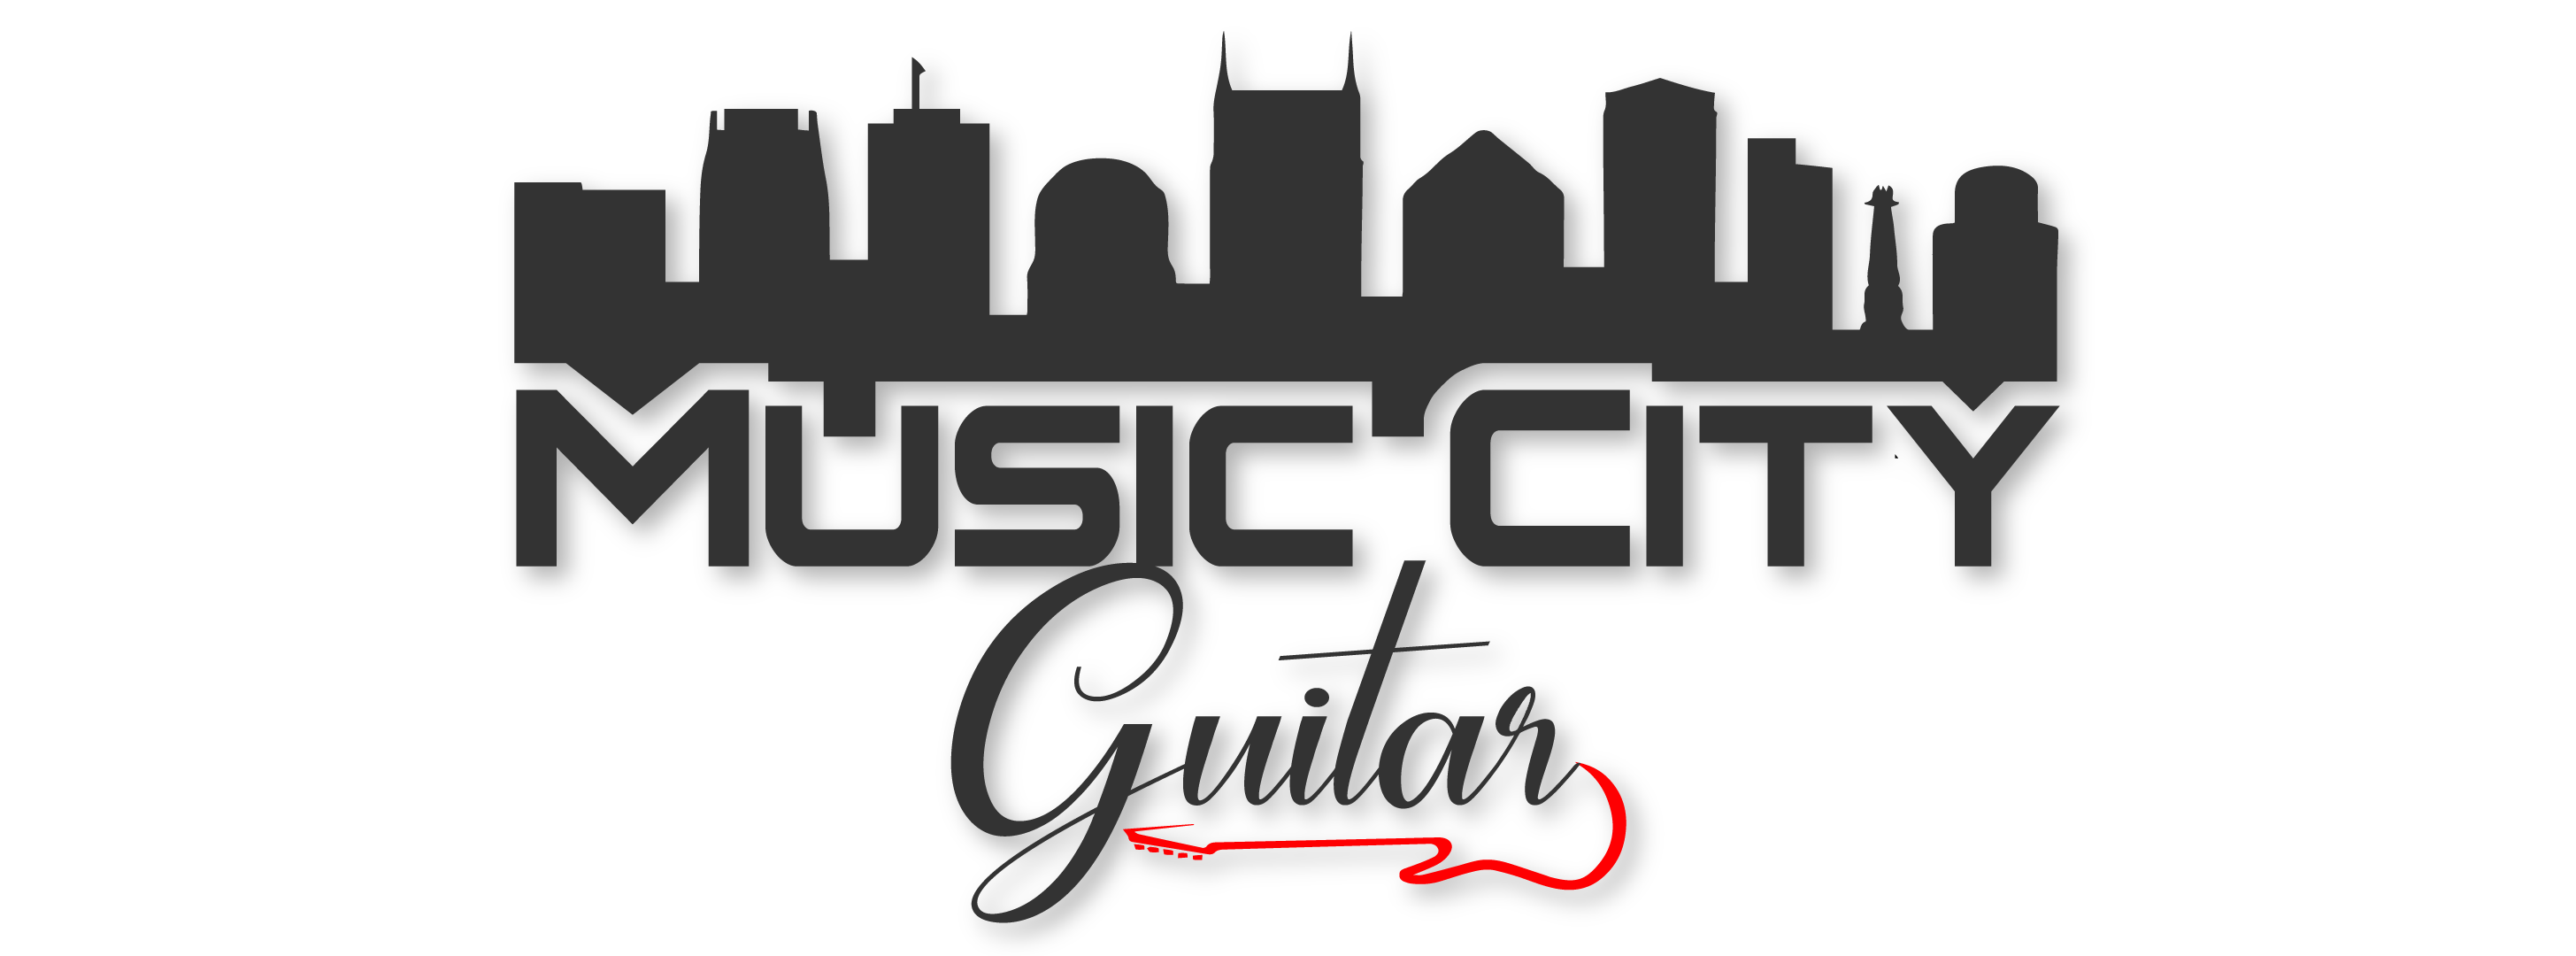 Music City Guitars Nashville TN Guitar Sales Service Store